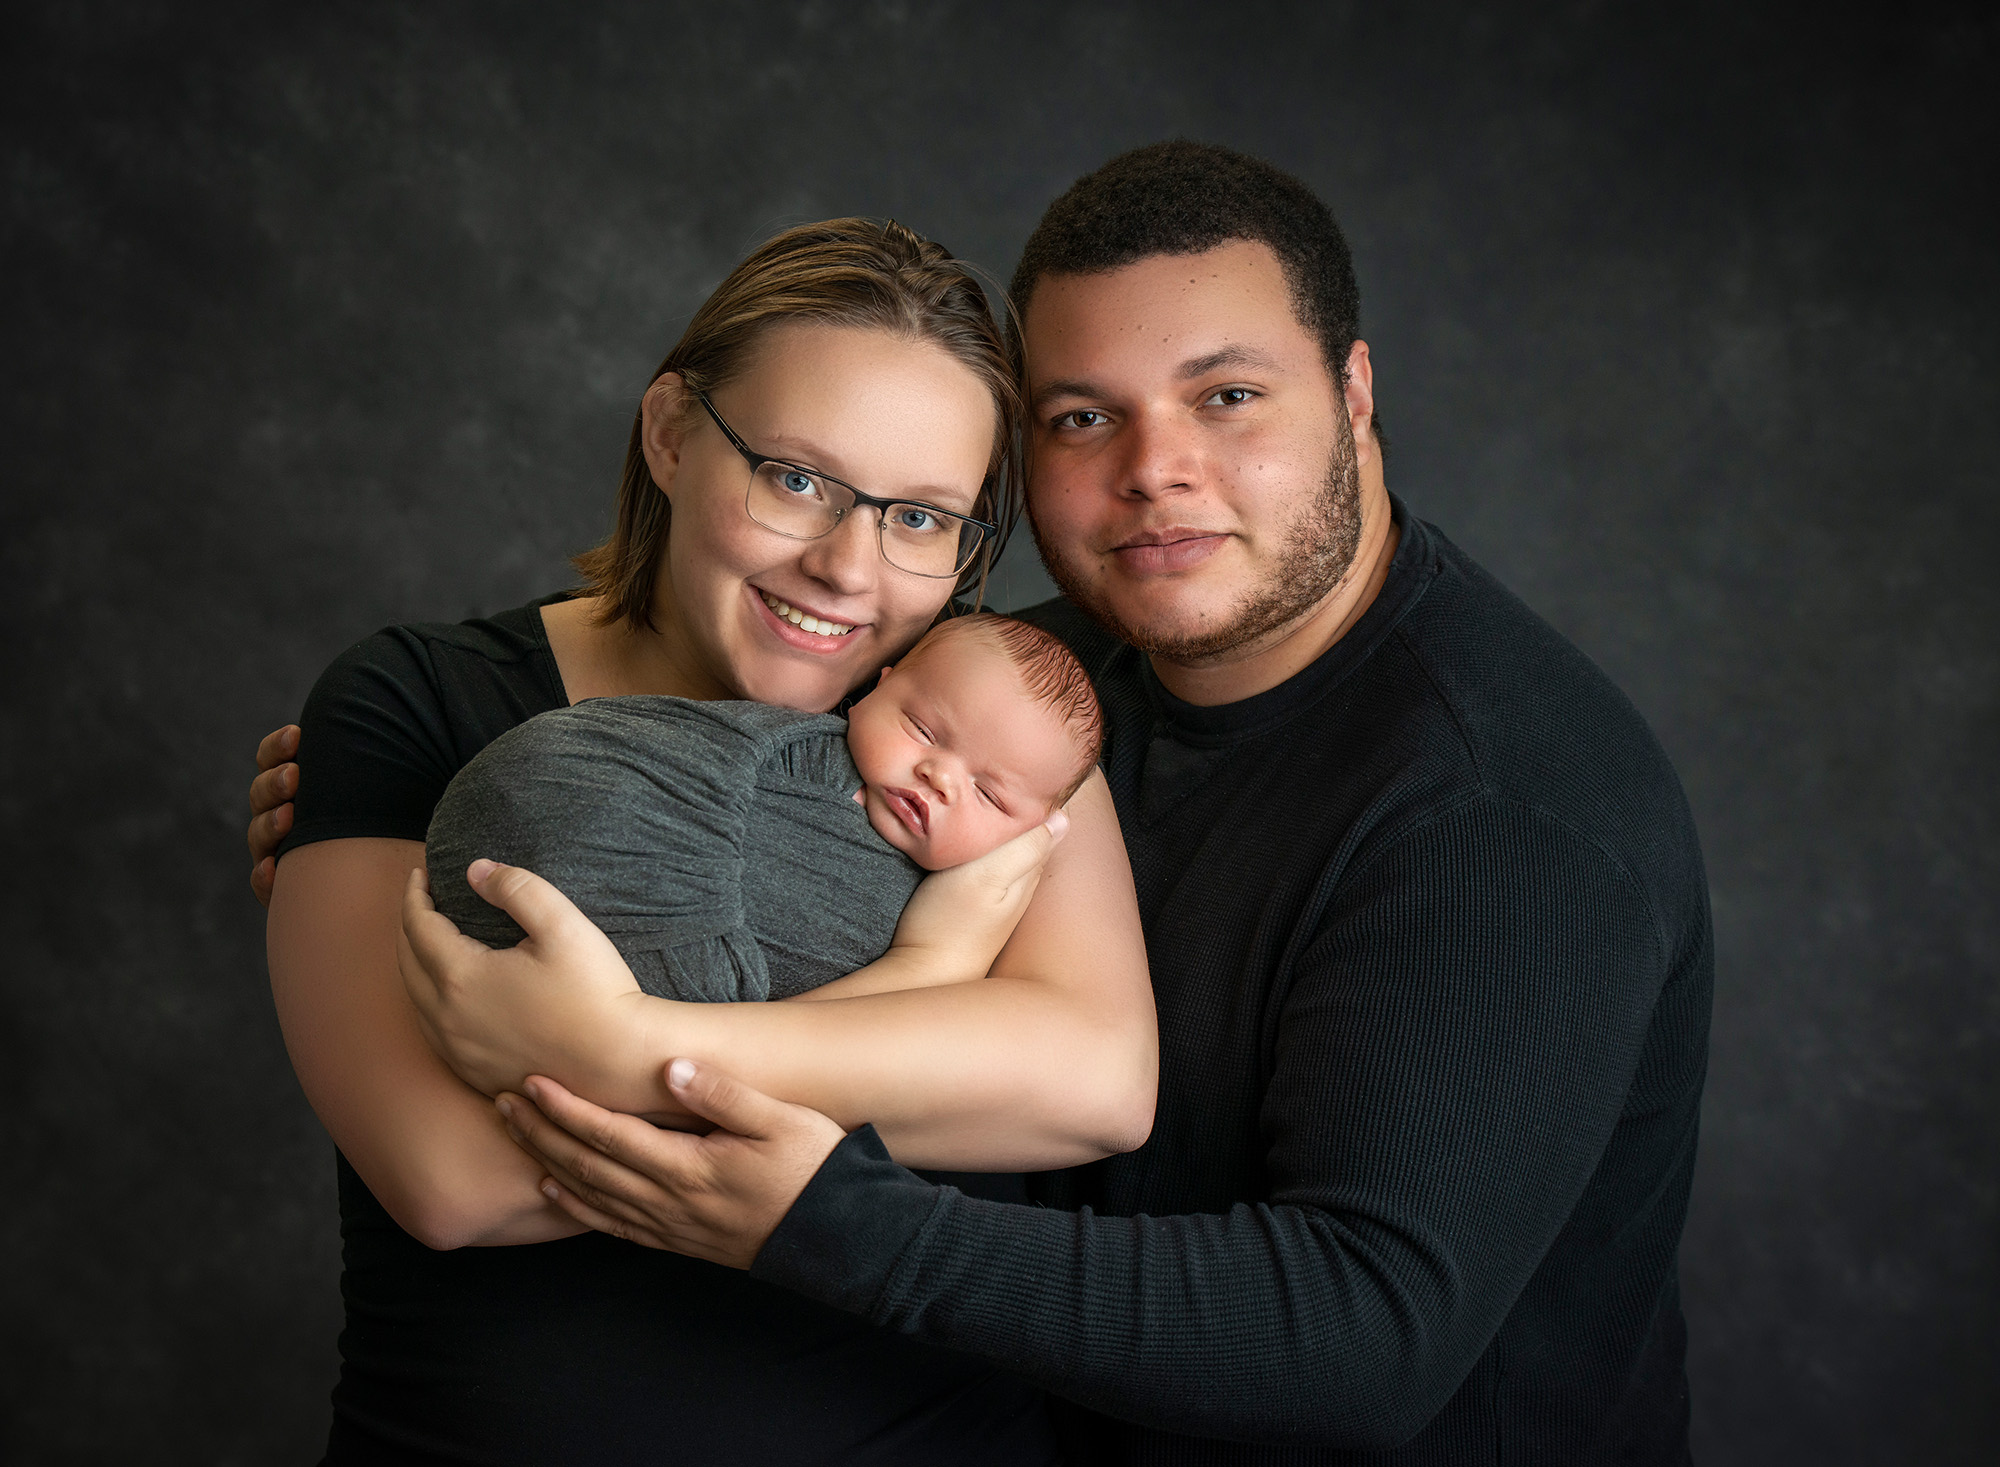 High school sweethearts newborn photos couple posing with newborn baby boy swaddled in gray